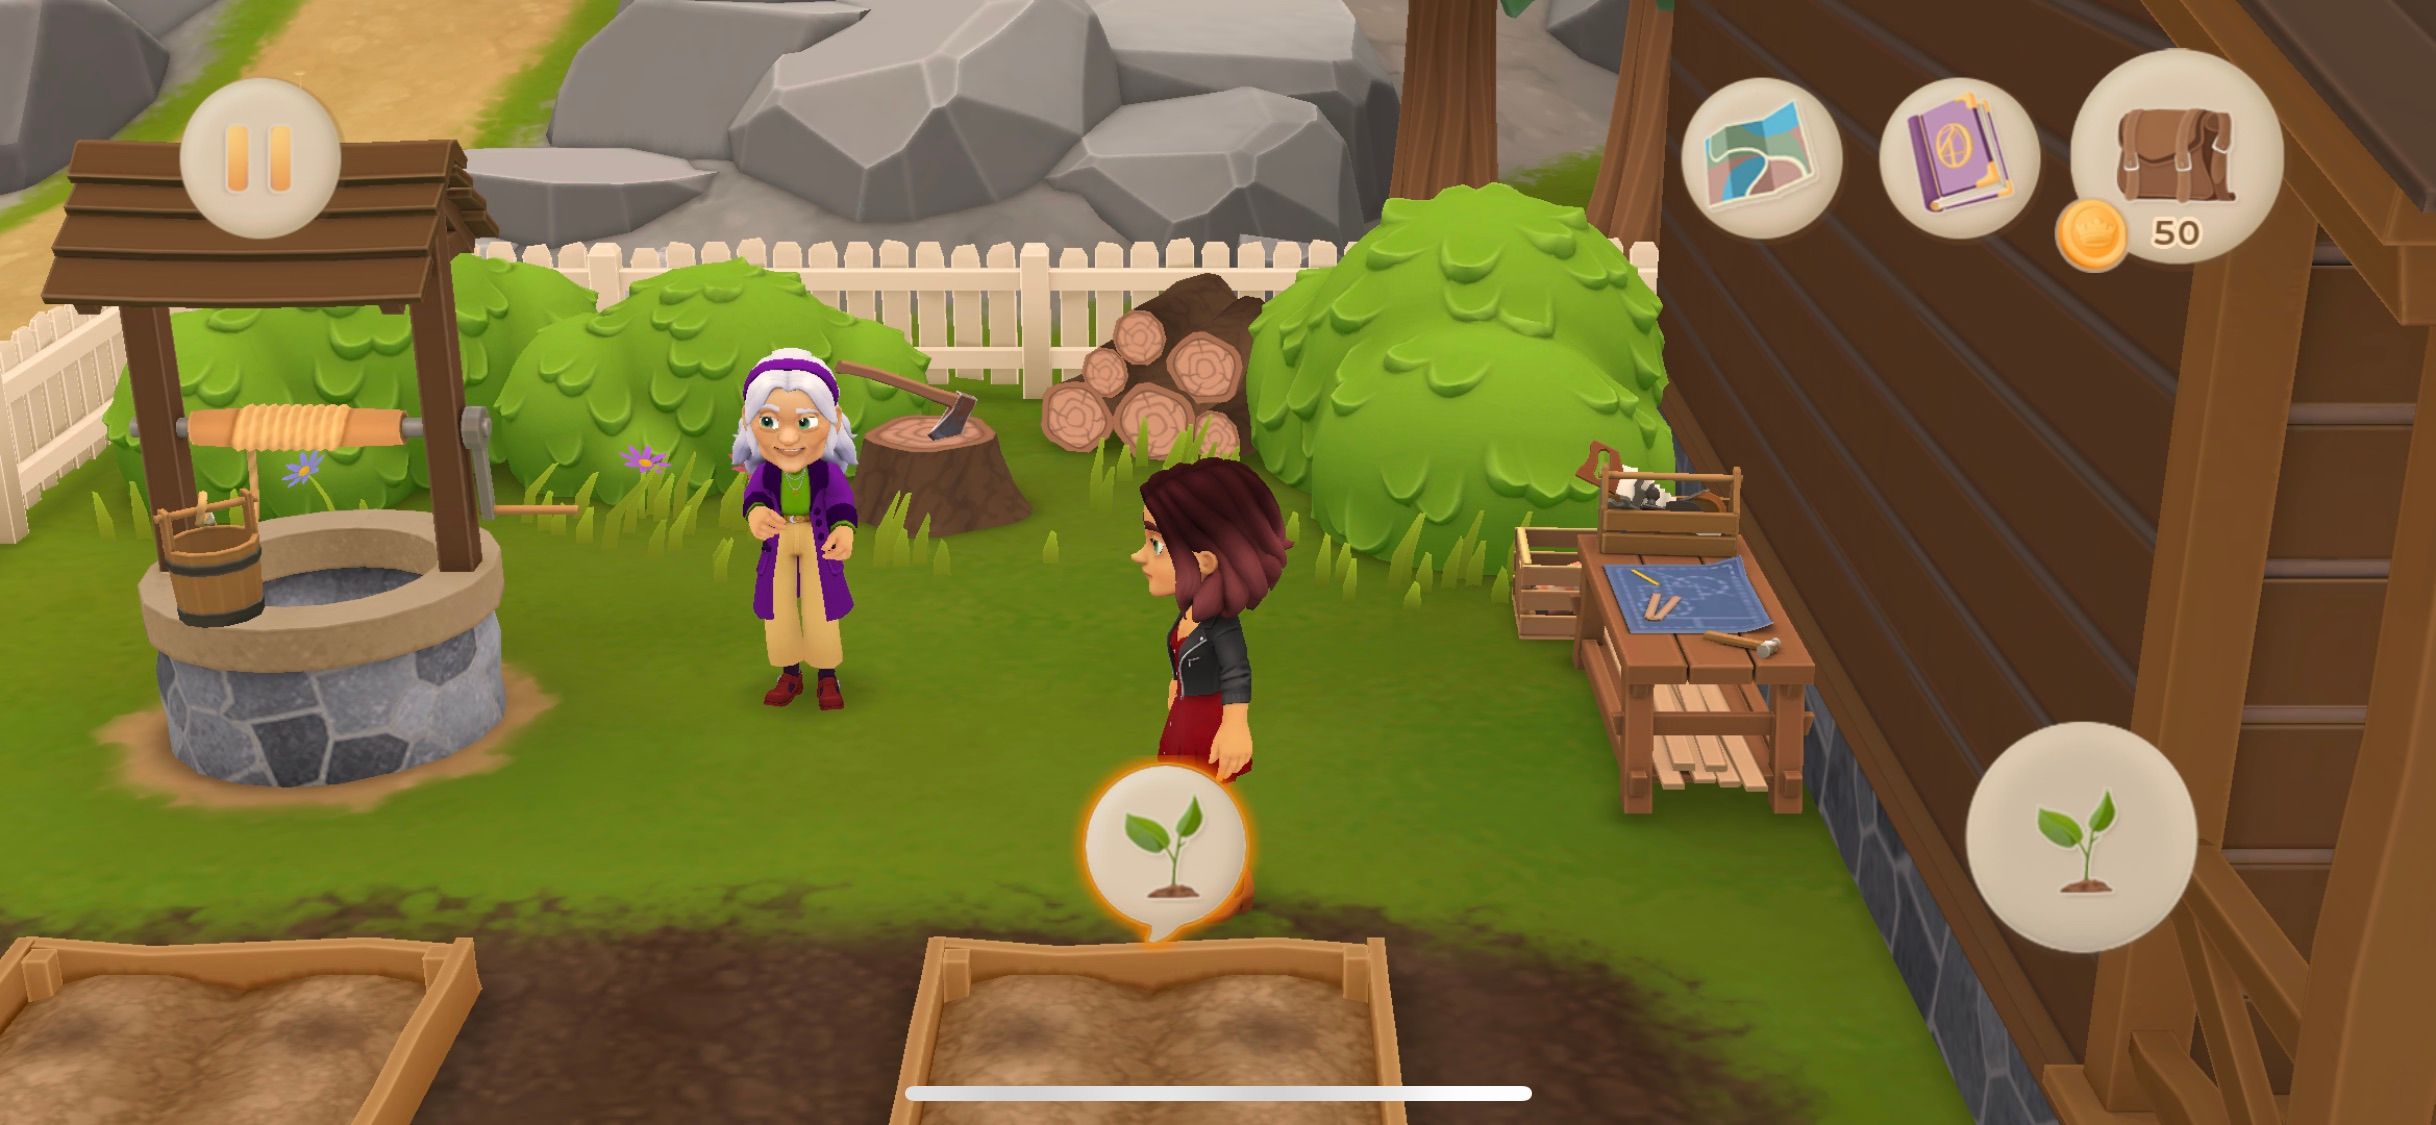 Screenshot of Wylde Flowers Apple Arcade gameplay screen